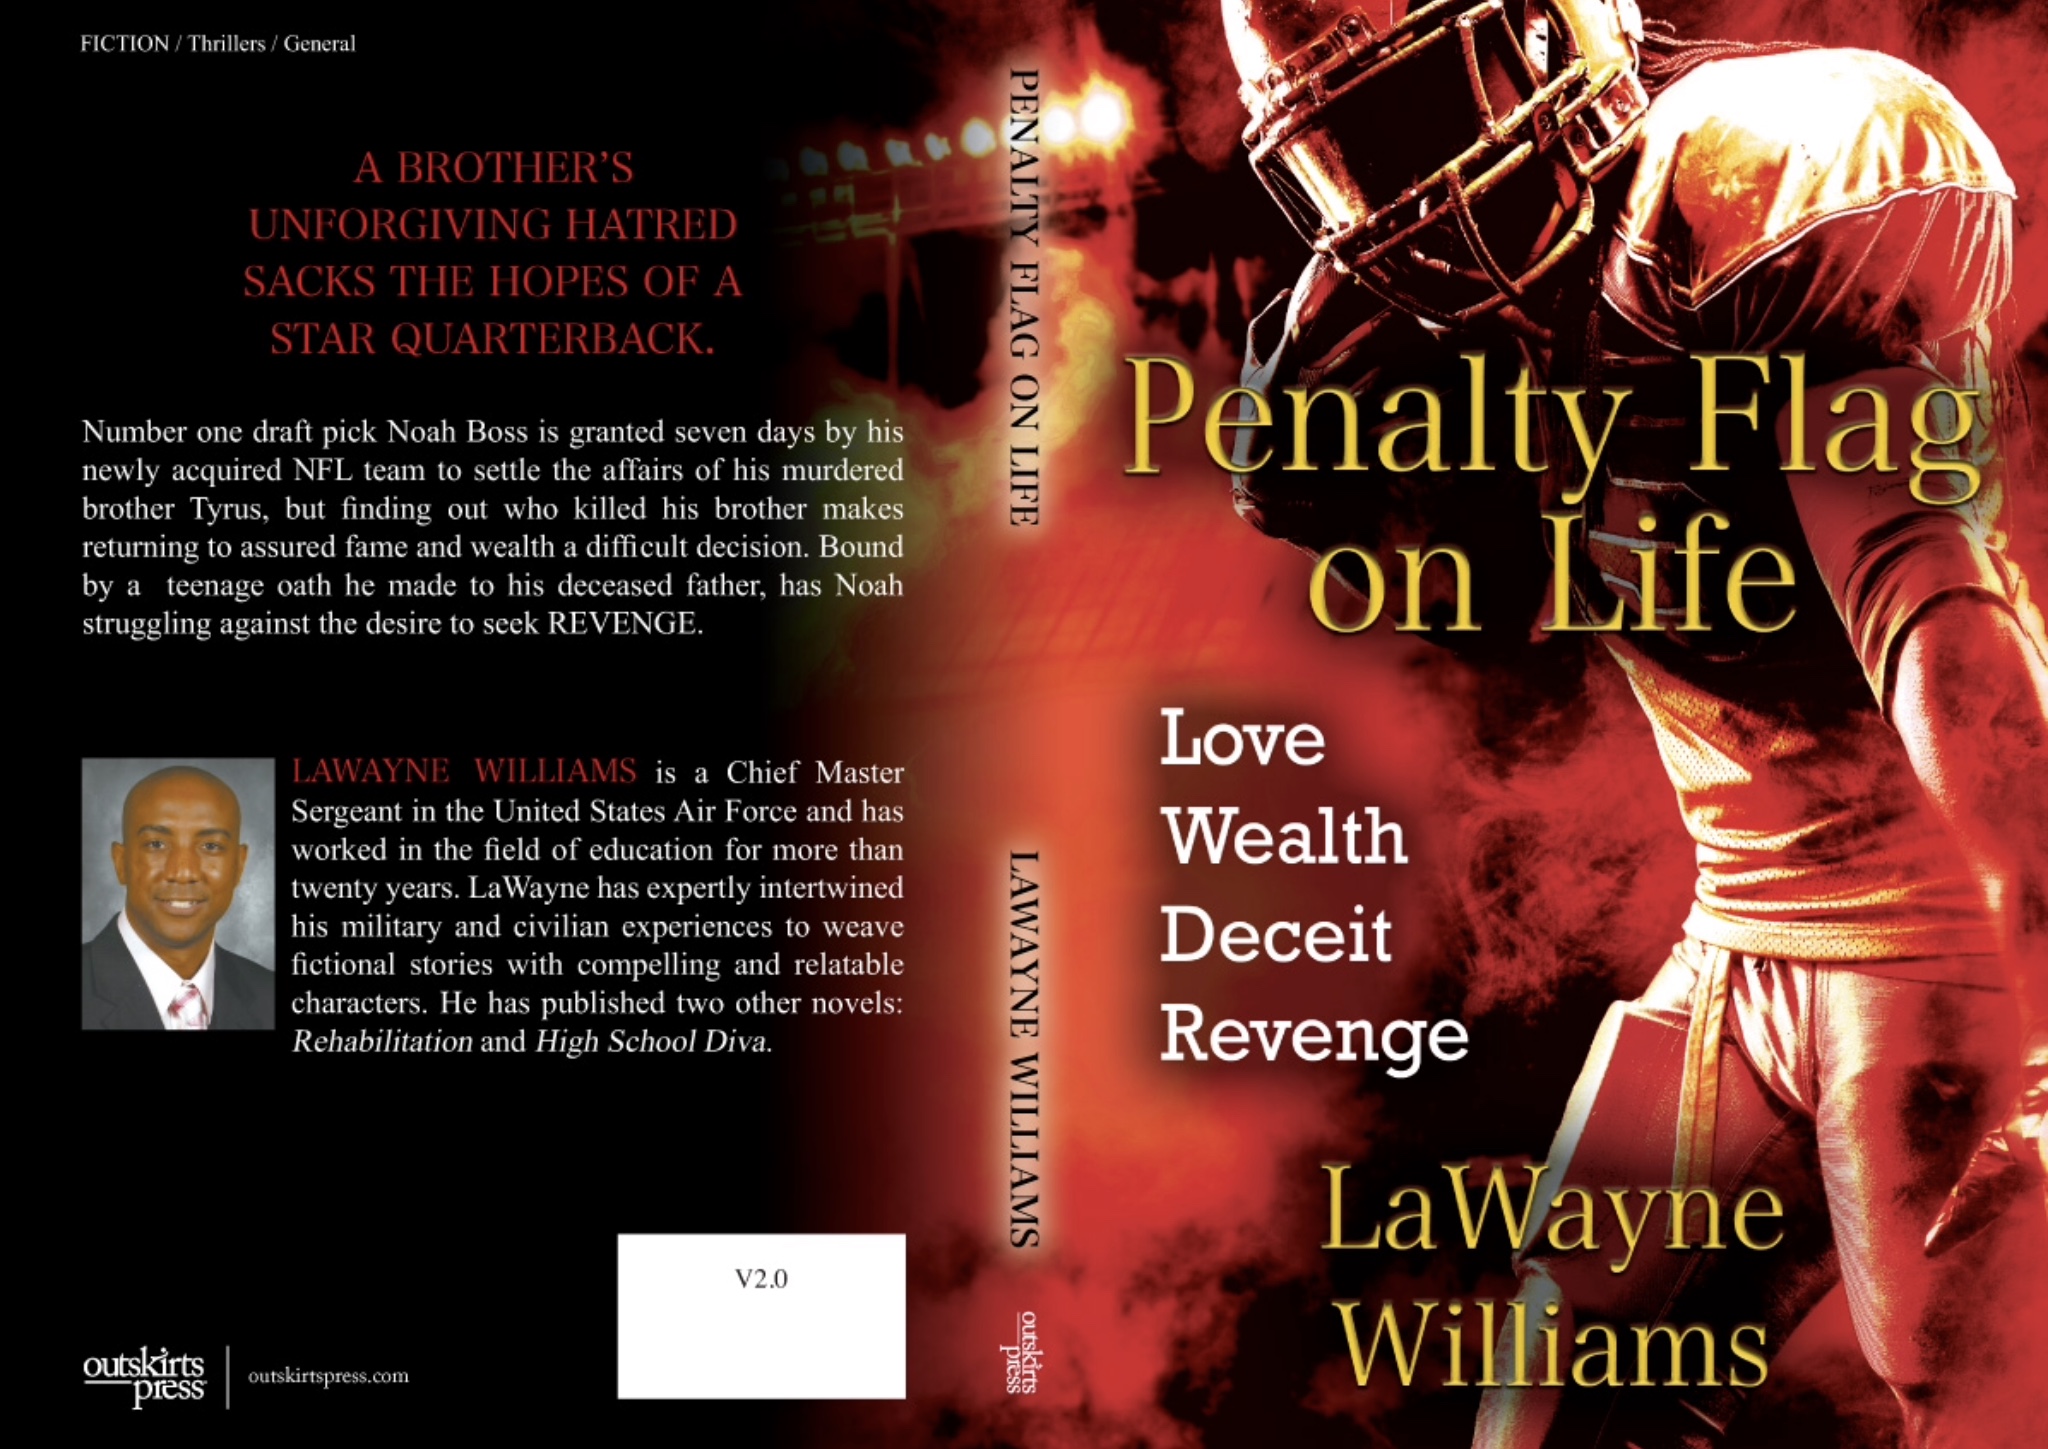 Penalty Flag on Life - book author LAWAYNE